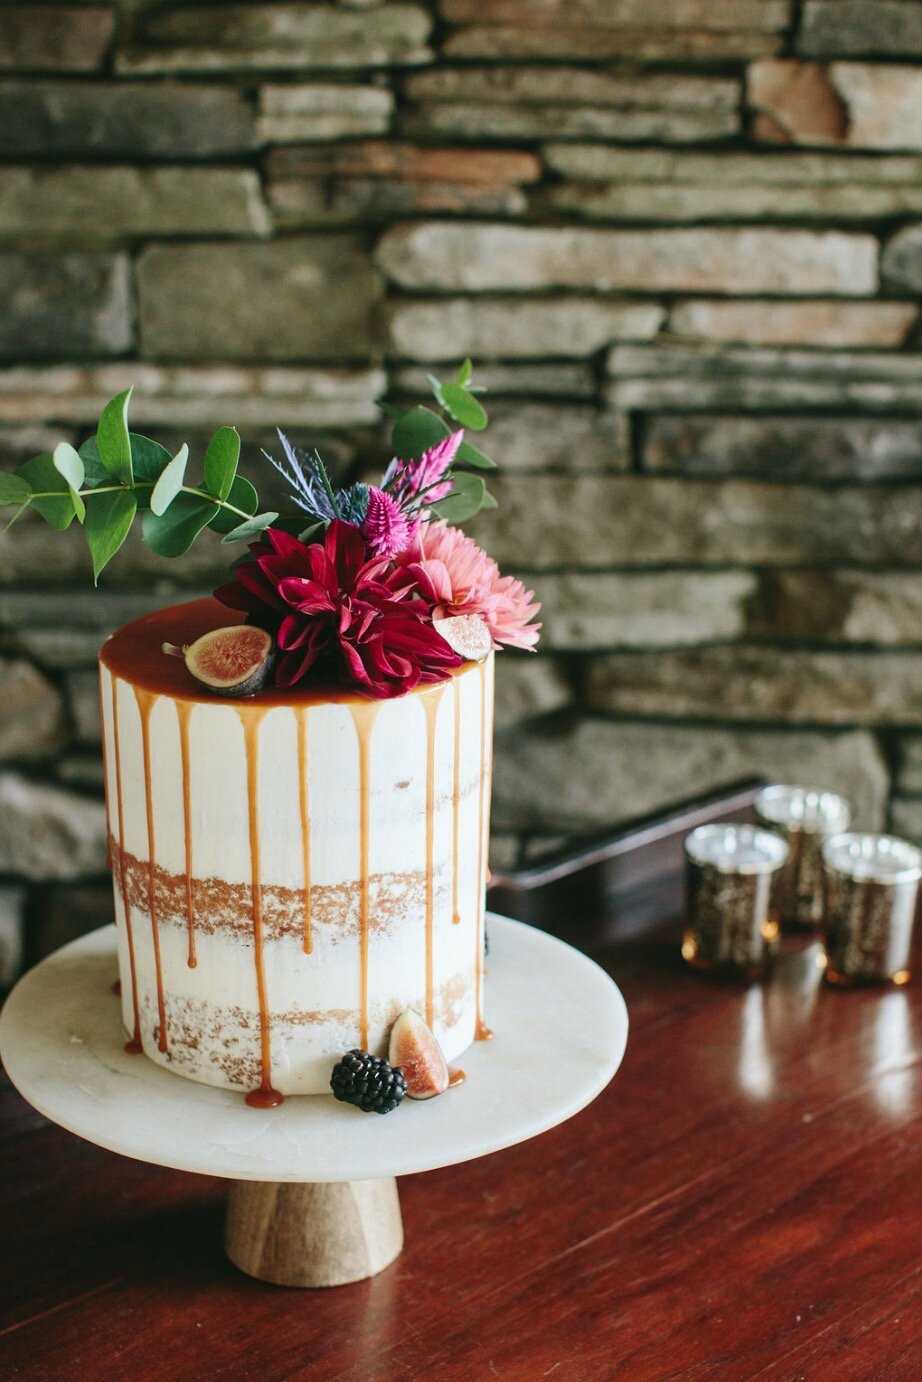 Cake Bake Shop's Cake Decorators Turntable – The Cake Bake Shop®